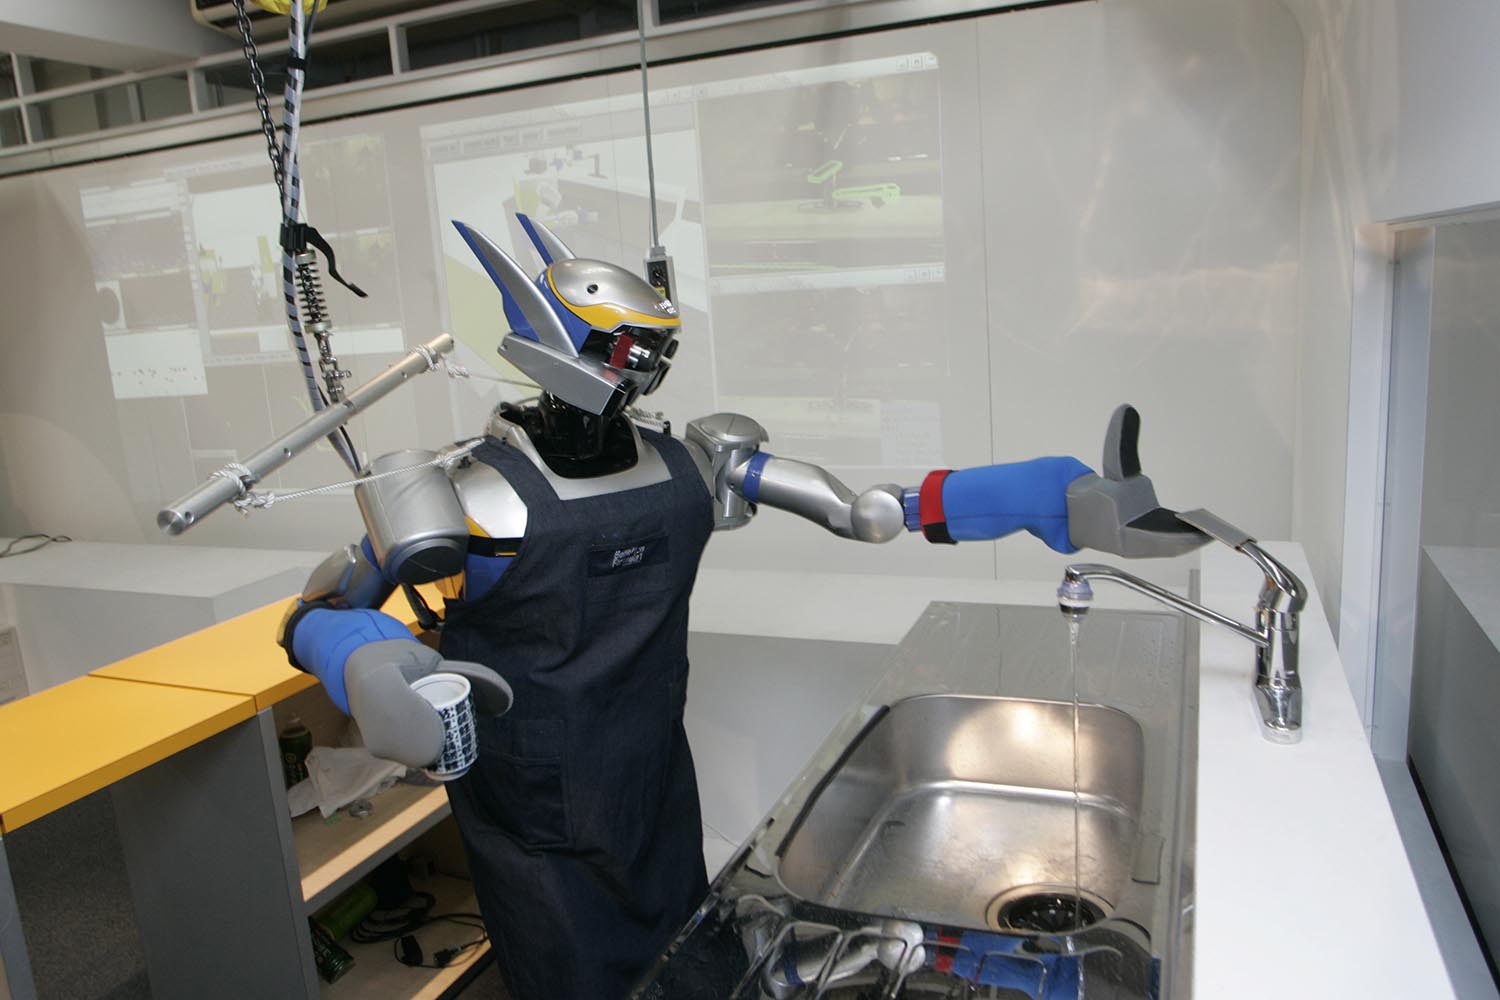 Especial mundo robot. Robot humanoide HRP-2, programado para hacer de camarero y pinche de cocina